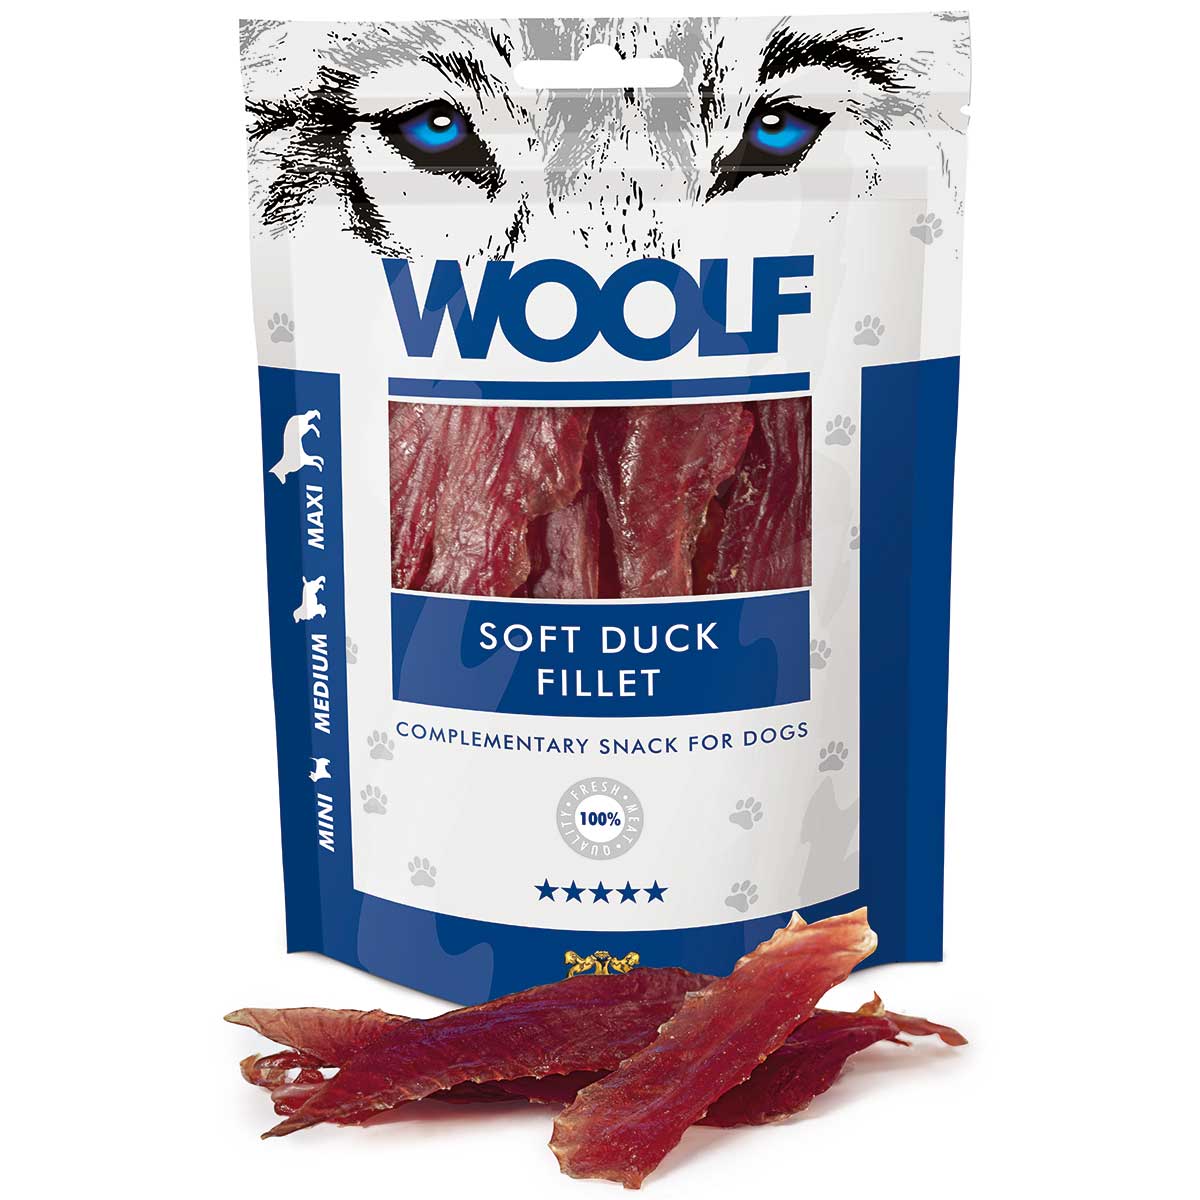 Woolf Dog treat soft duck fillet